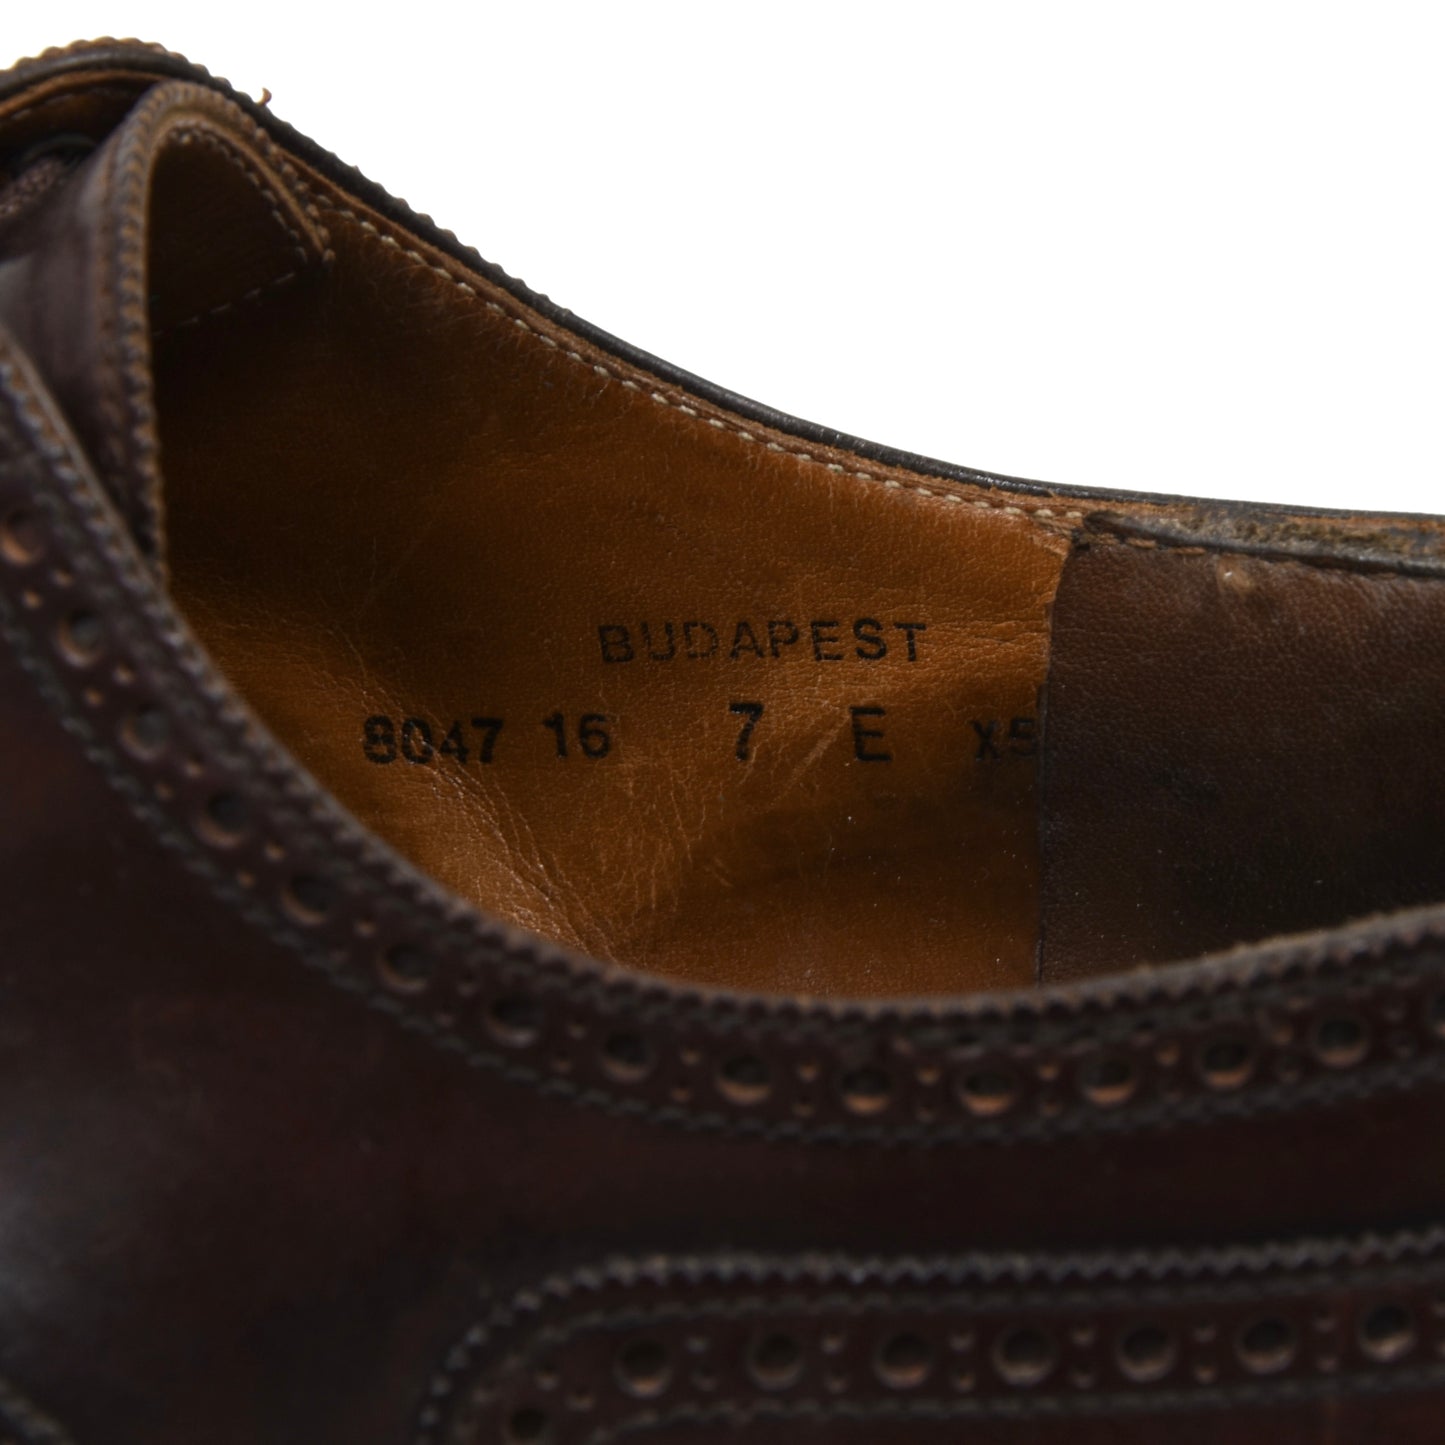 Alt Wien x Crockett & Jones Shell Cordovan Shoes Size 7E - Burgundy